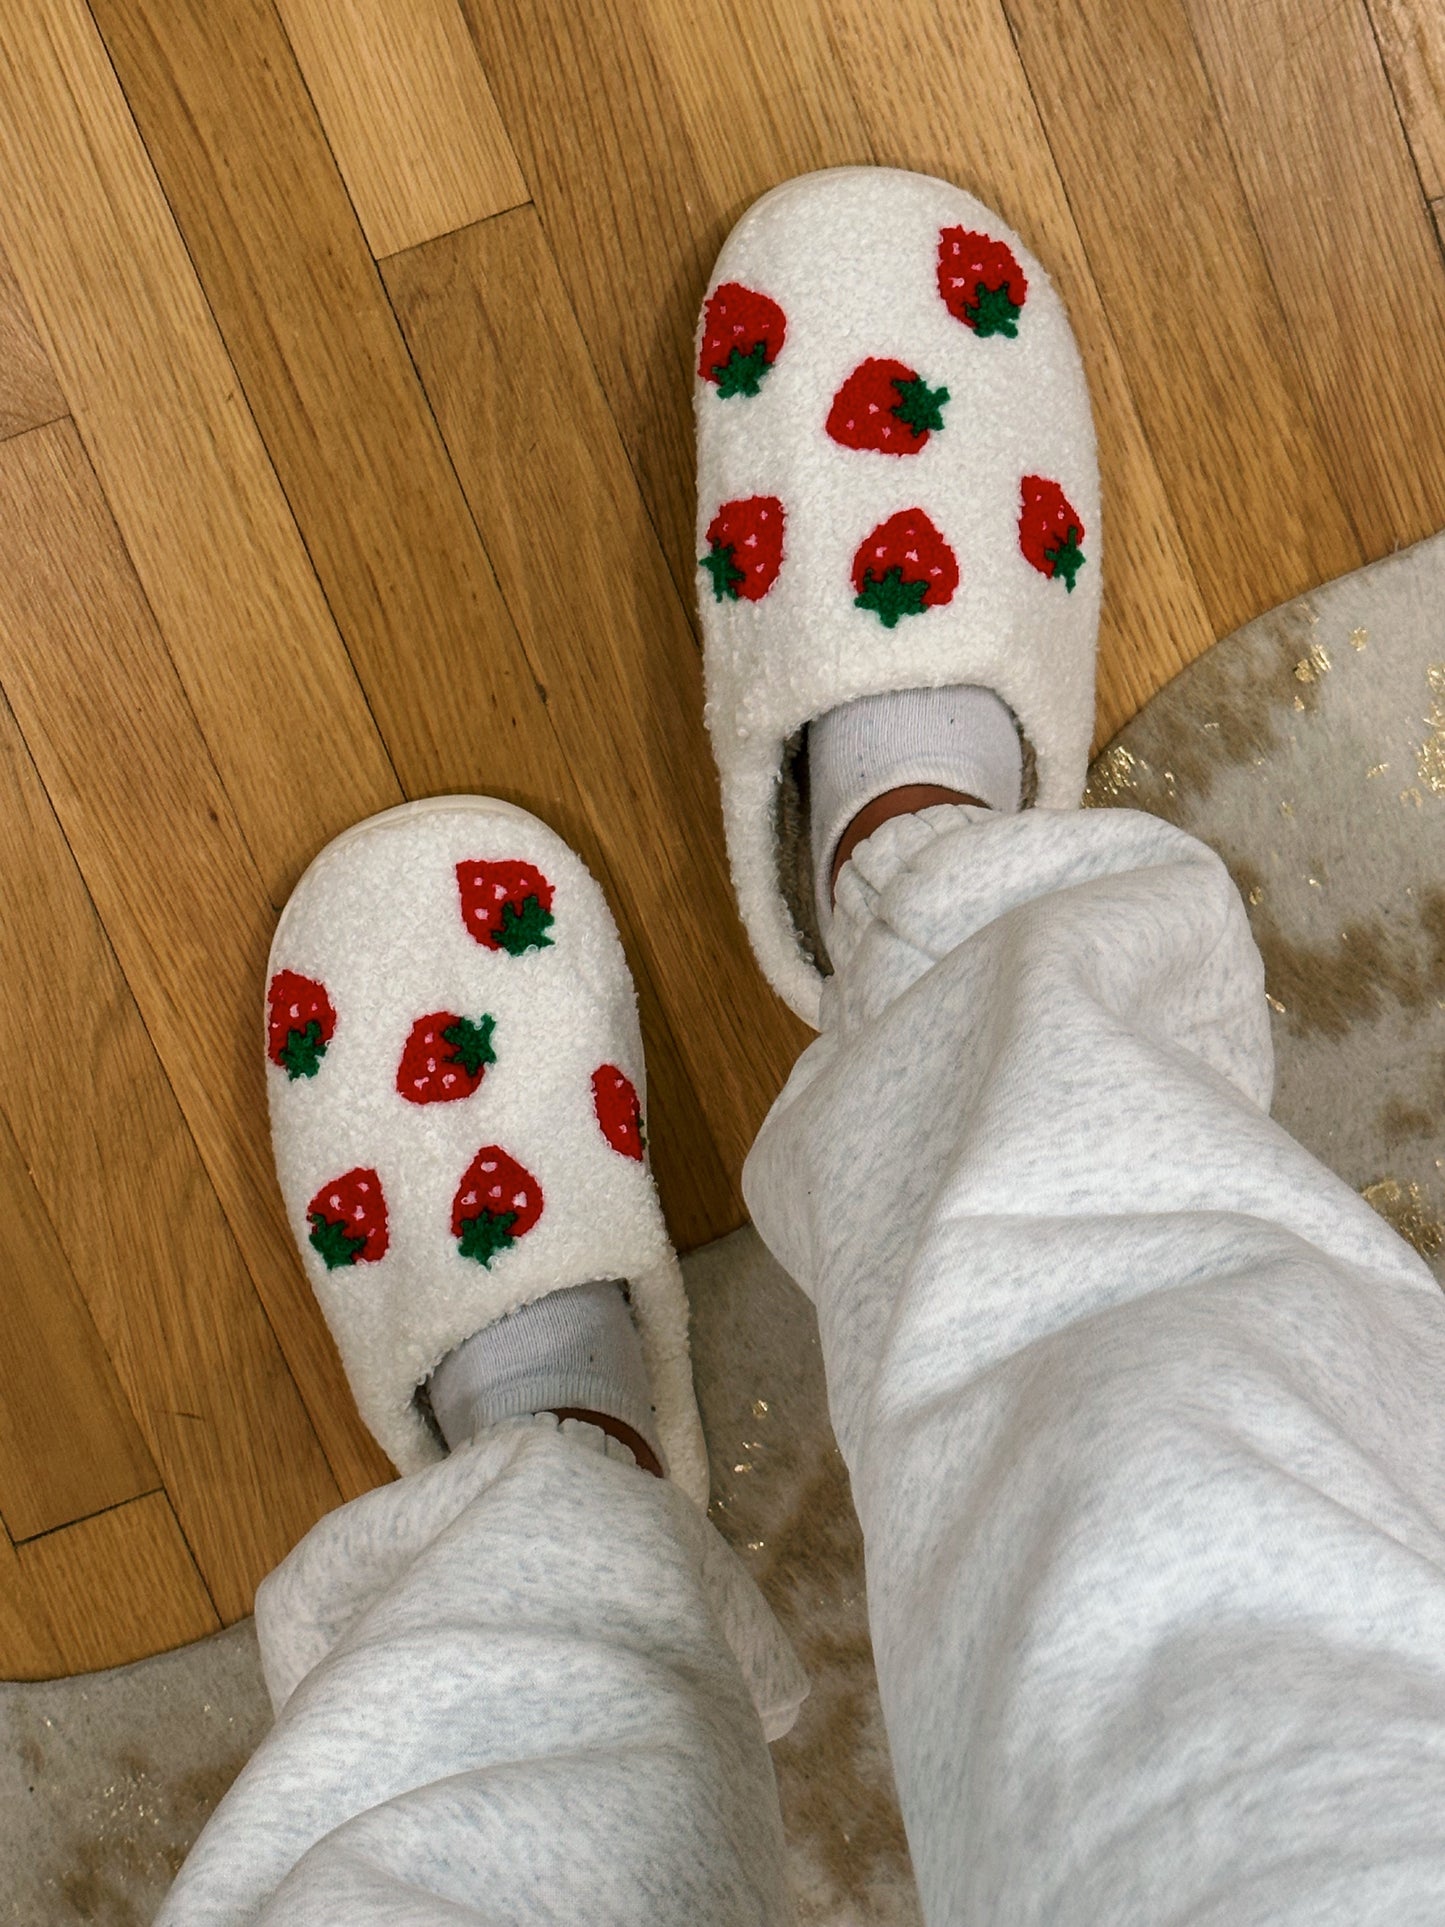 Strawberry Slippers